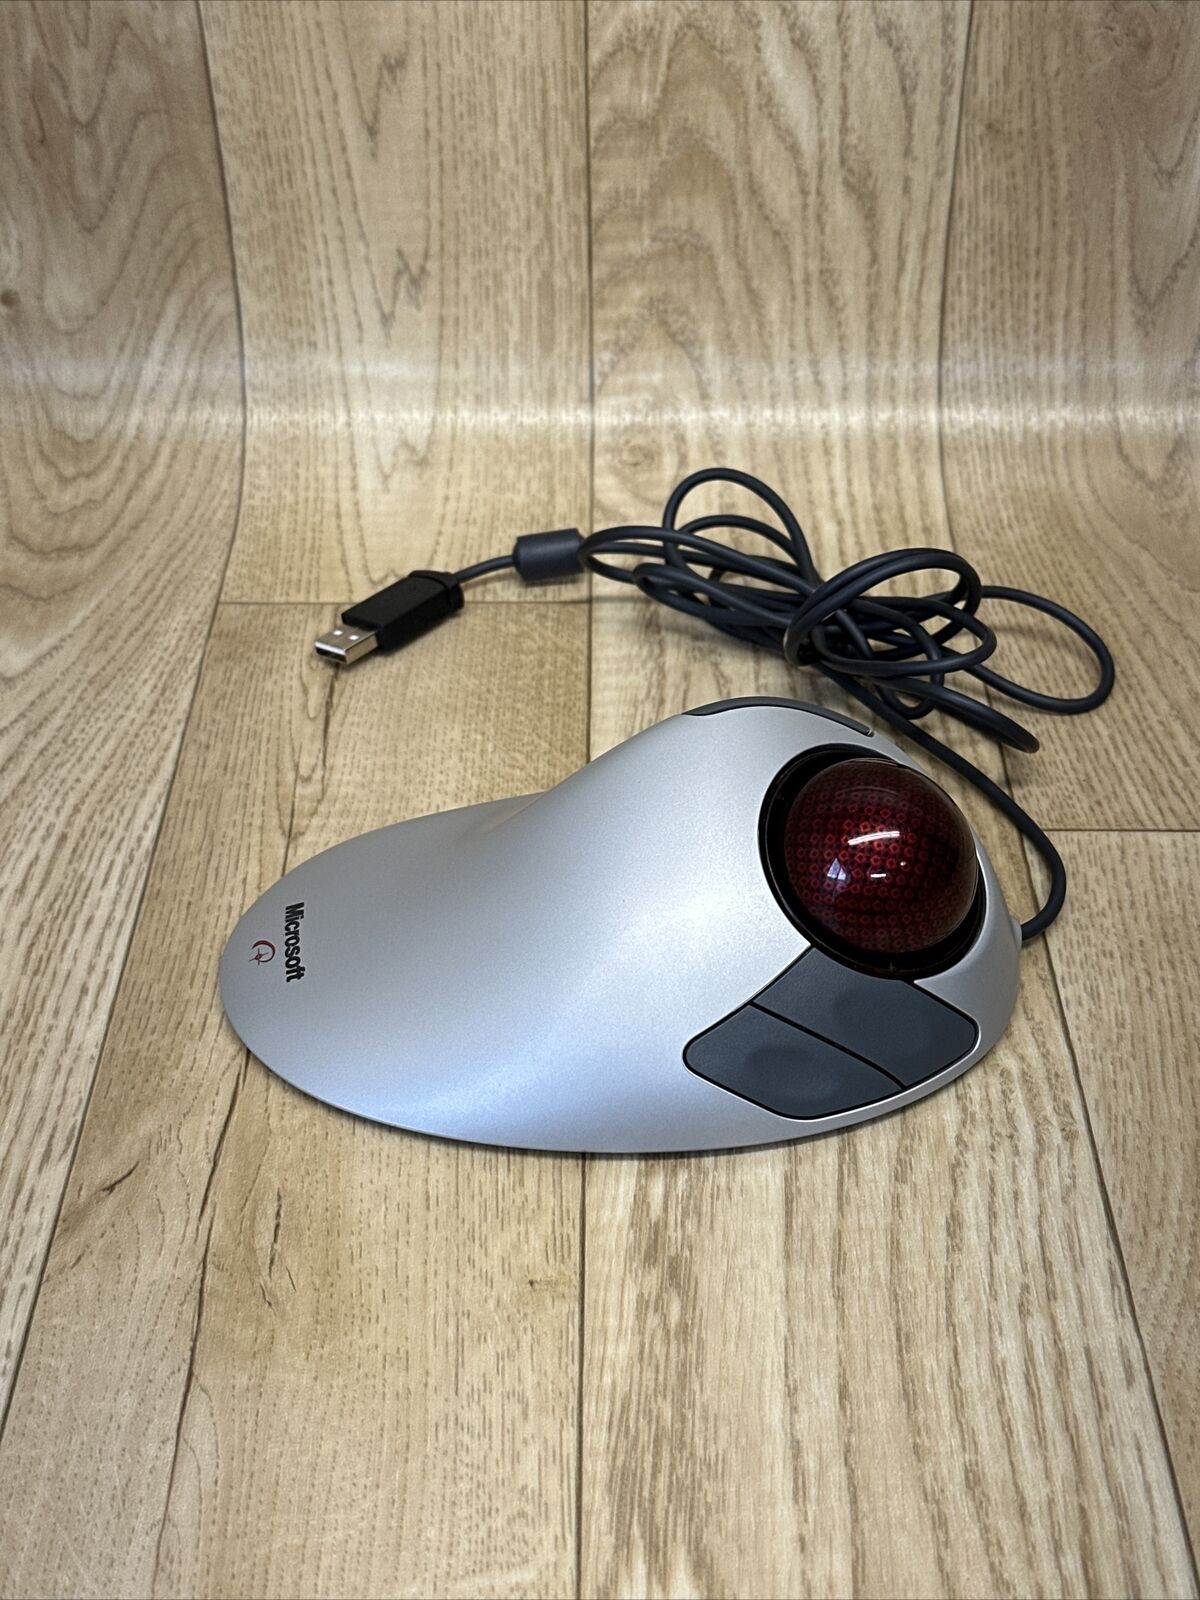 Microsoft Trackball Explorer Mouse 1.0 PS2/USB x08-70390